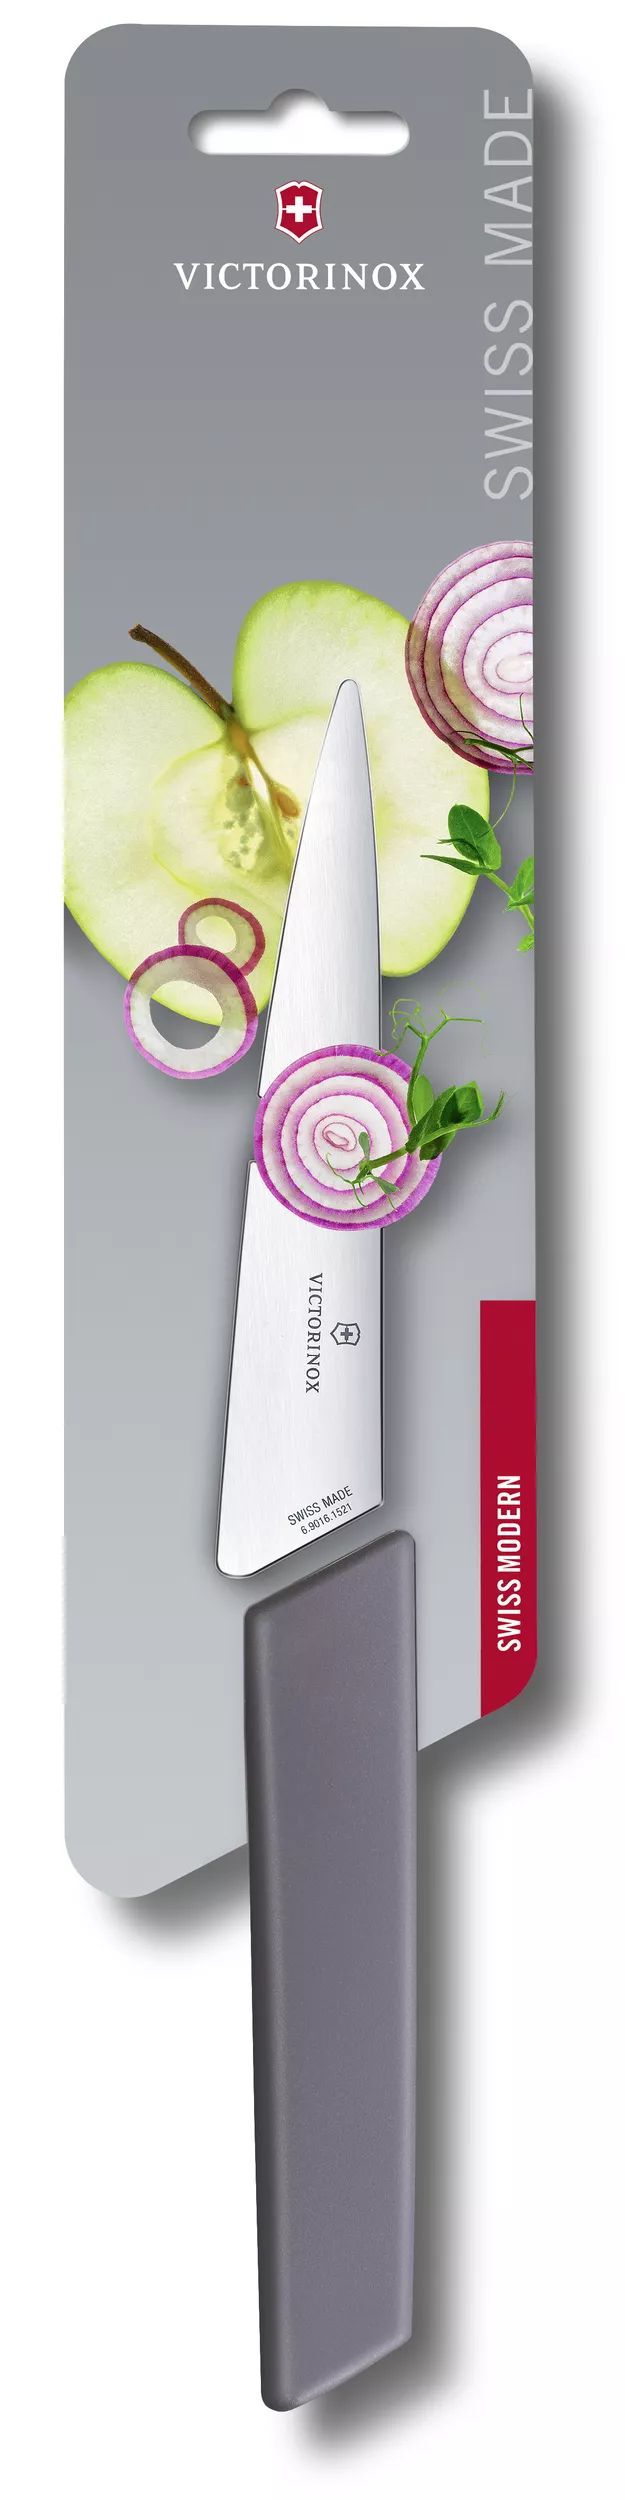 Swiss Modern Office Knife - 6.9016.1521B